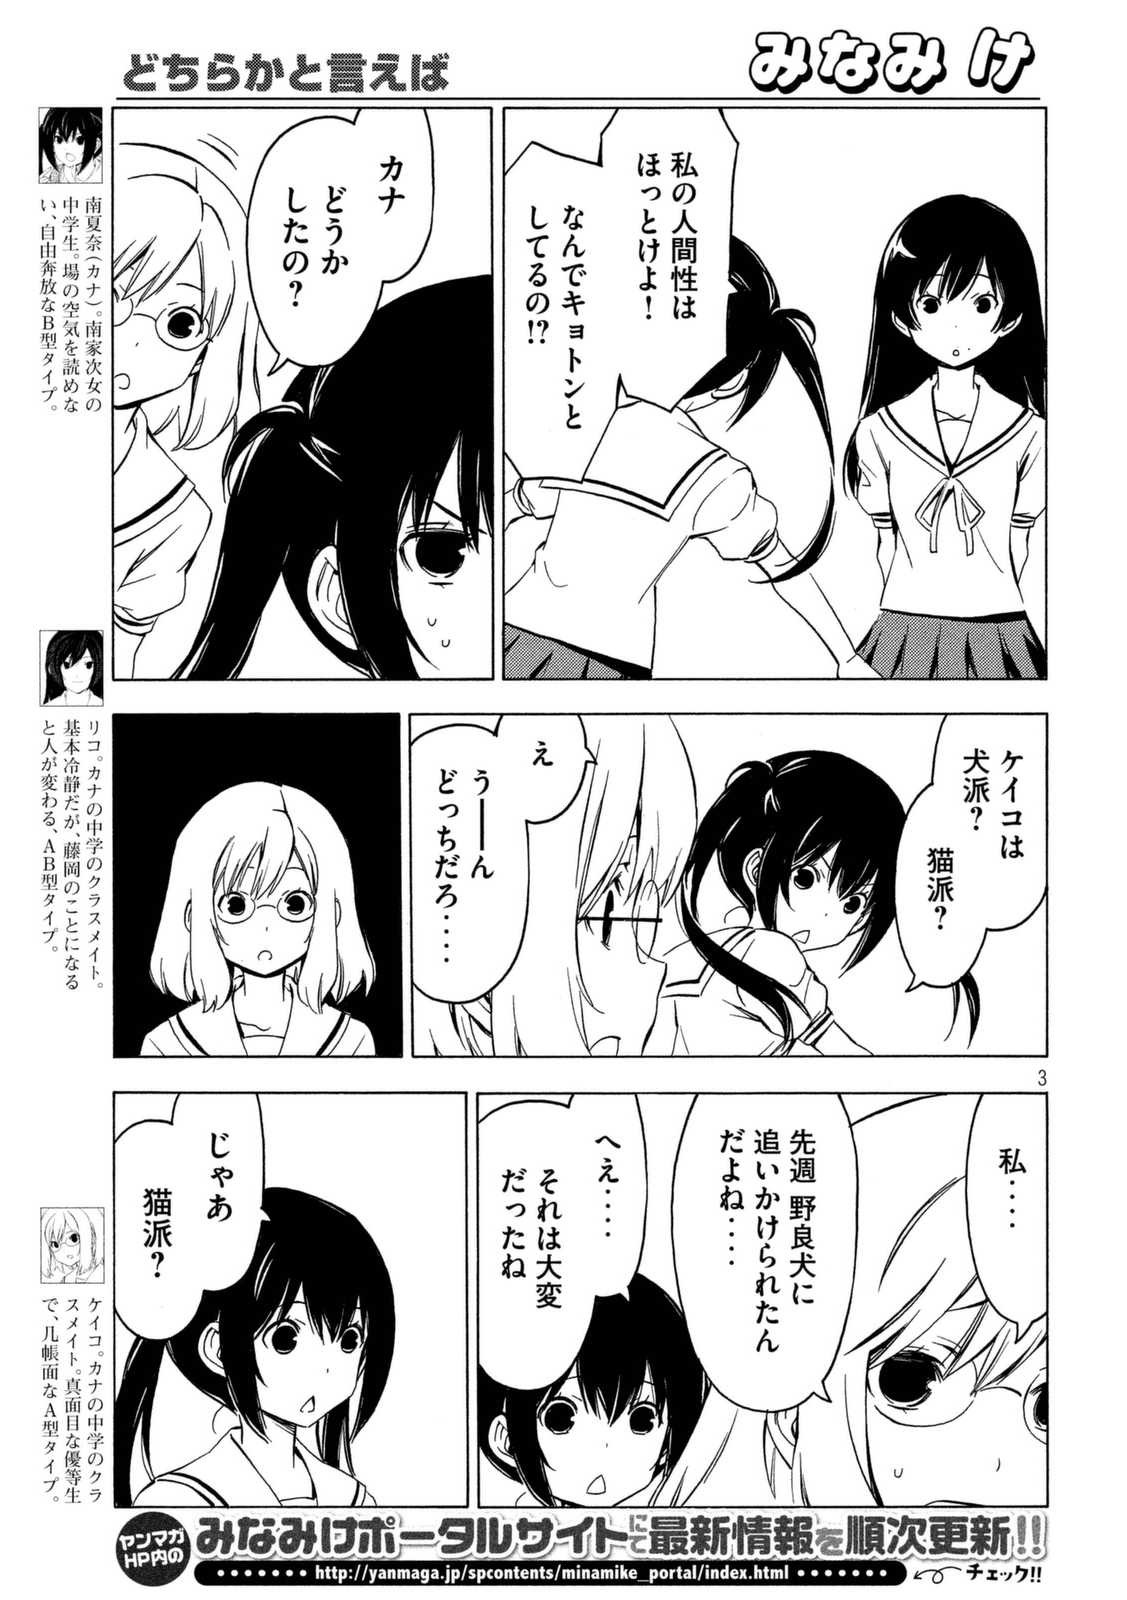 Minami-ke - Chapter 277 - Page 3